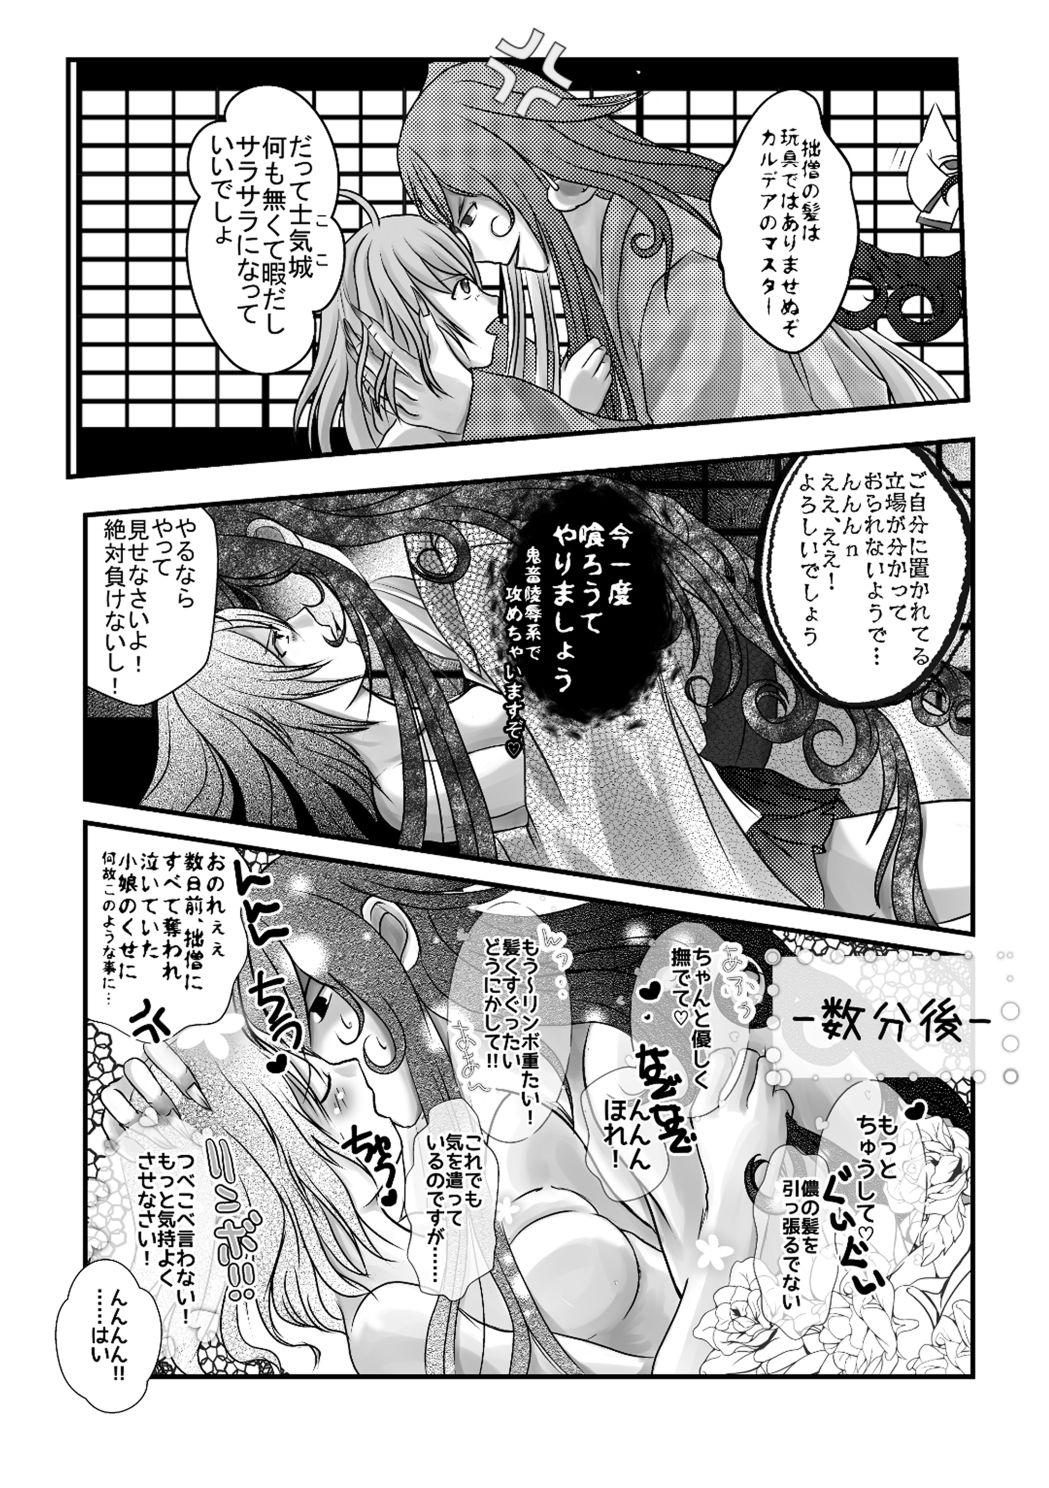 ] Rin guda ♀ rakugaki guda yuru manga(Fate/Grand Order] 8